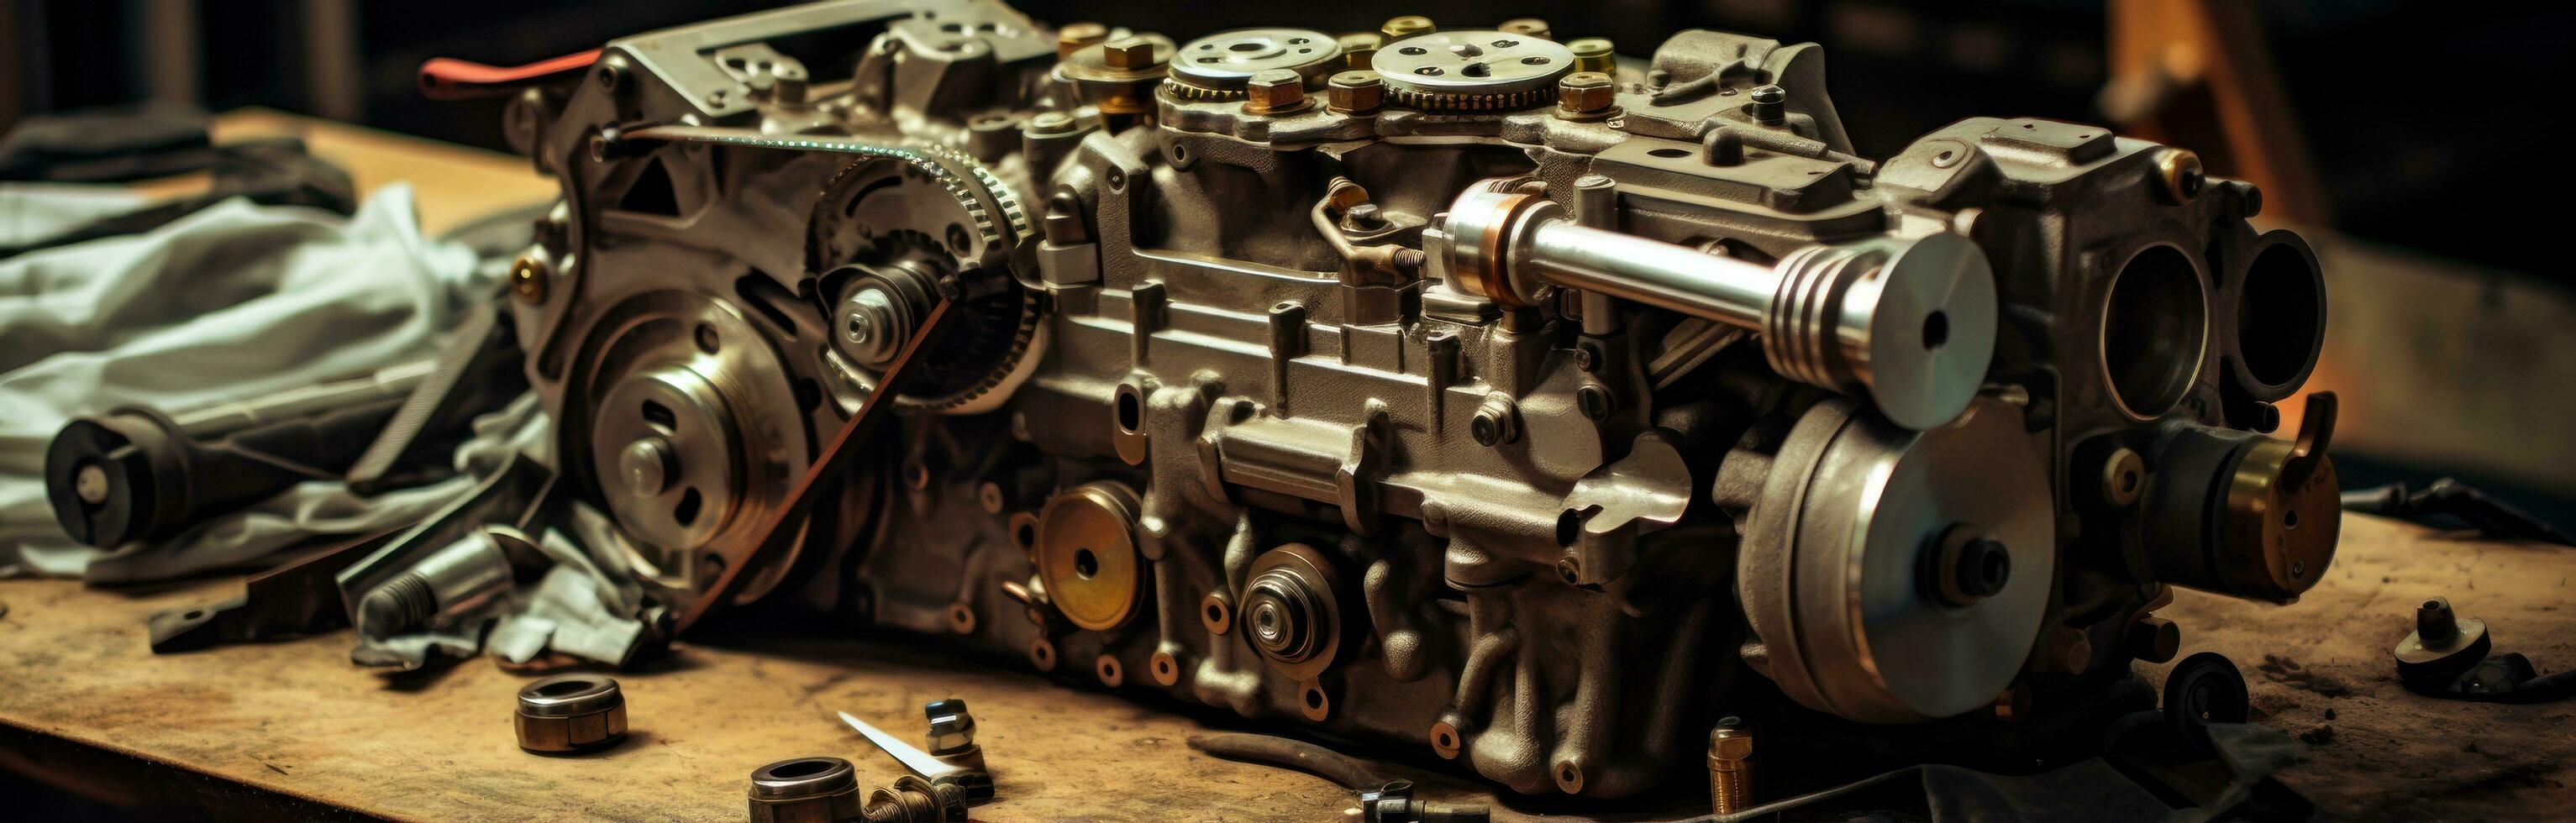 Auto engine mechanic photo